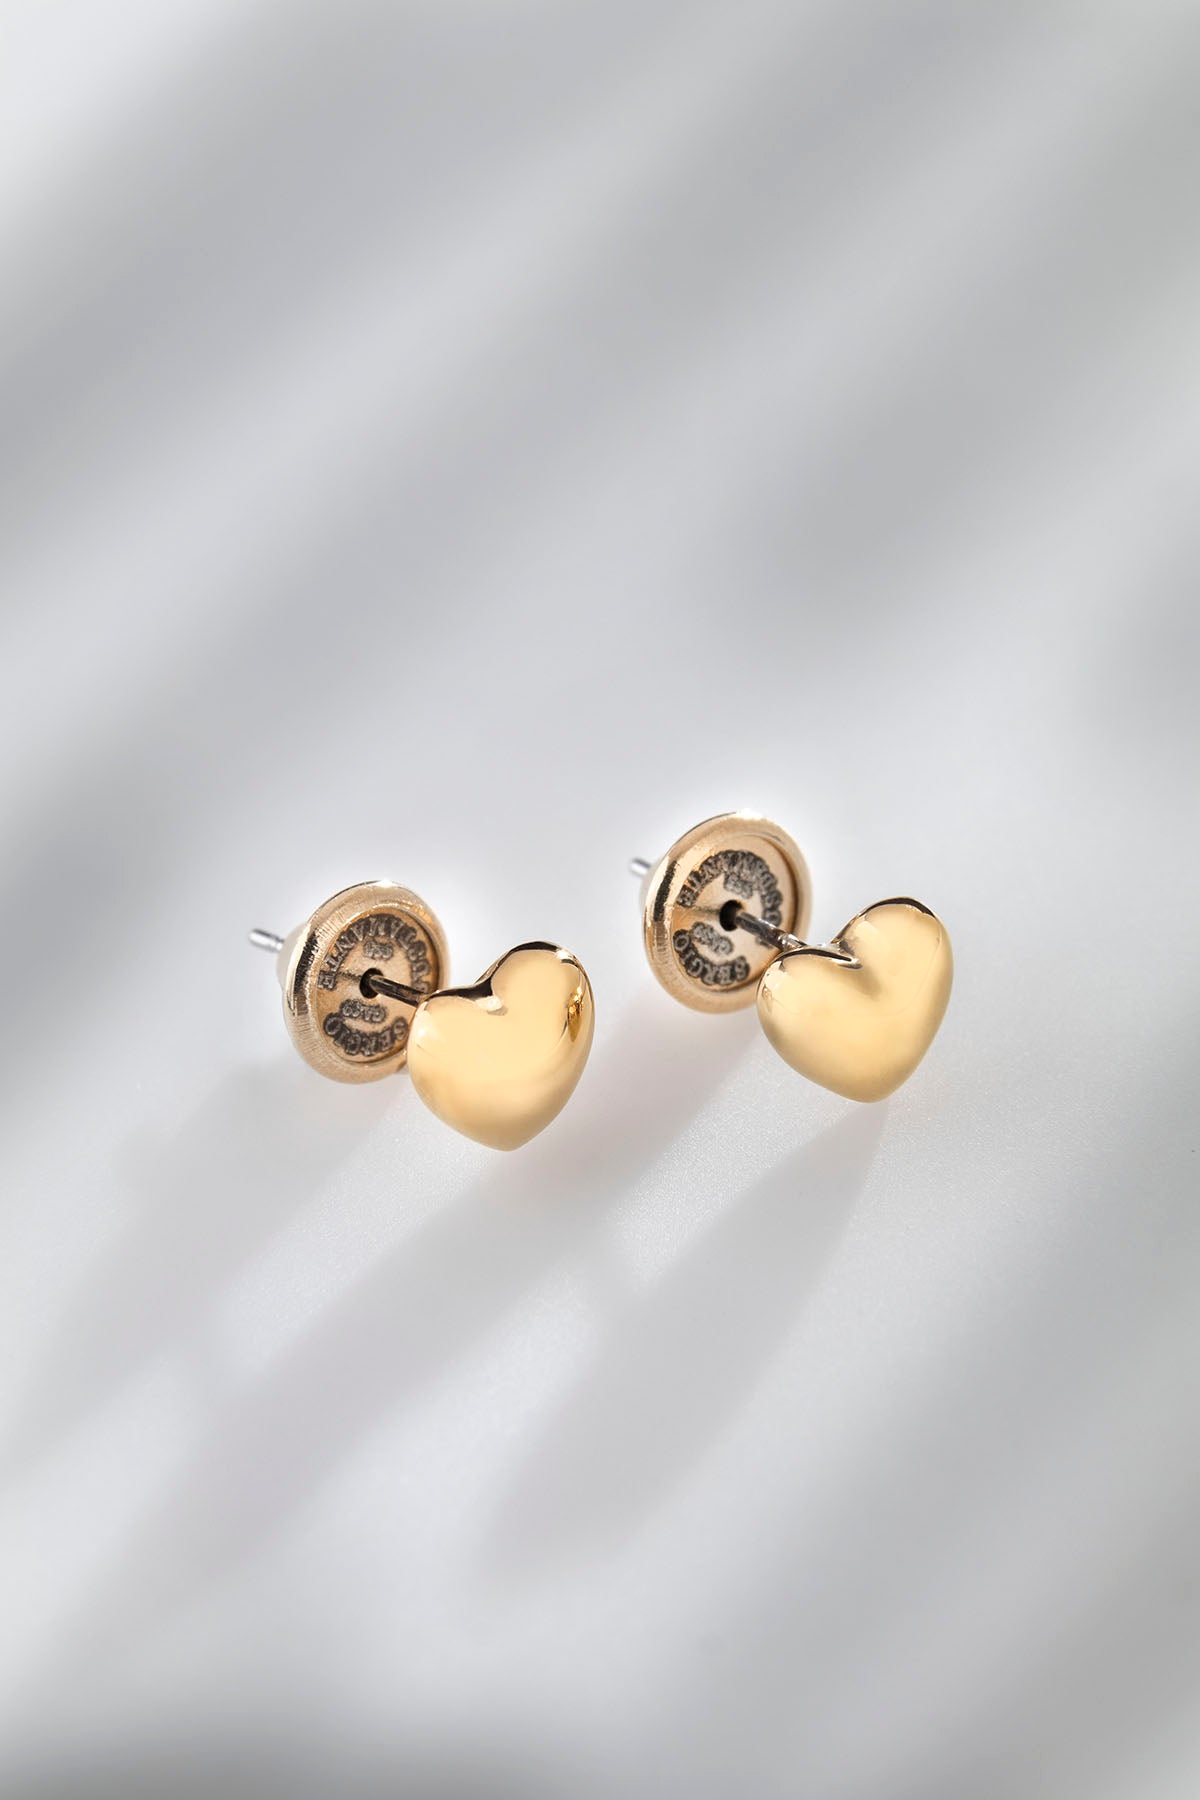 Plain heart earrings, mini